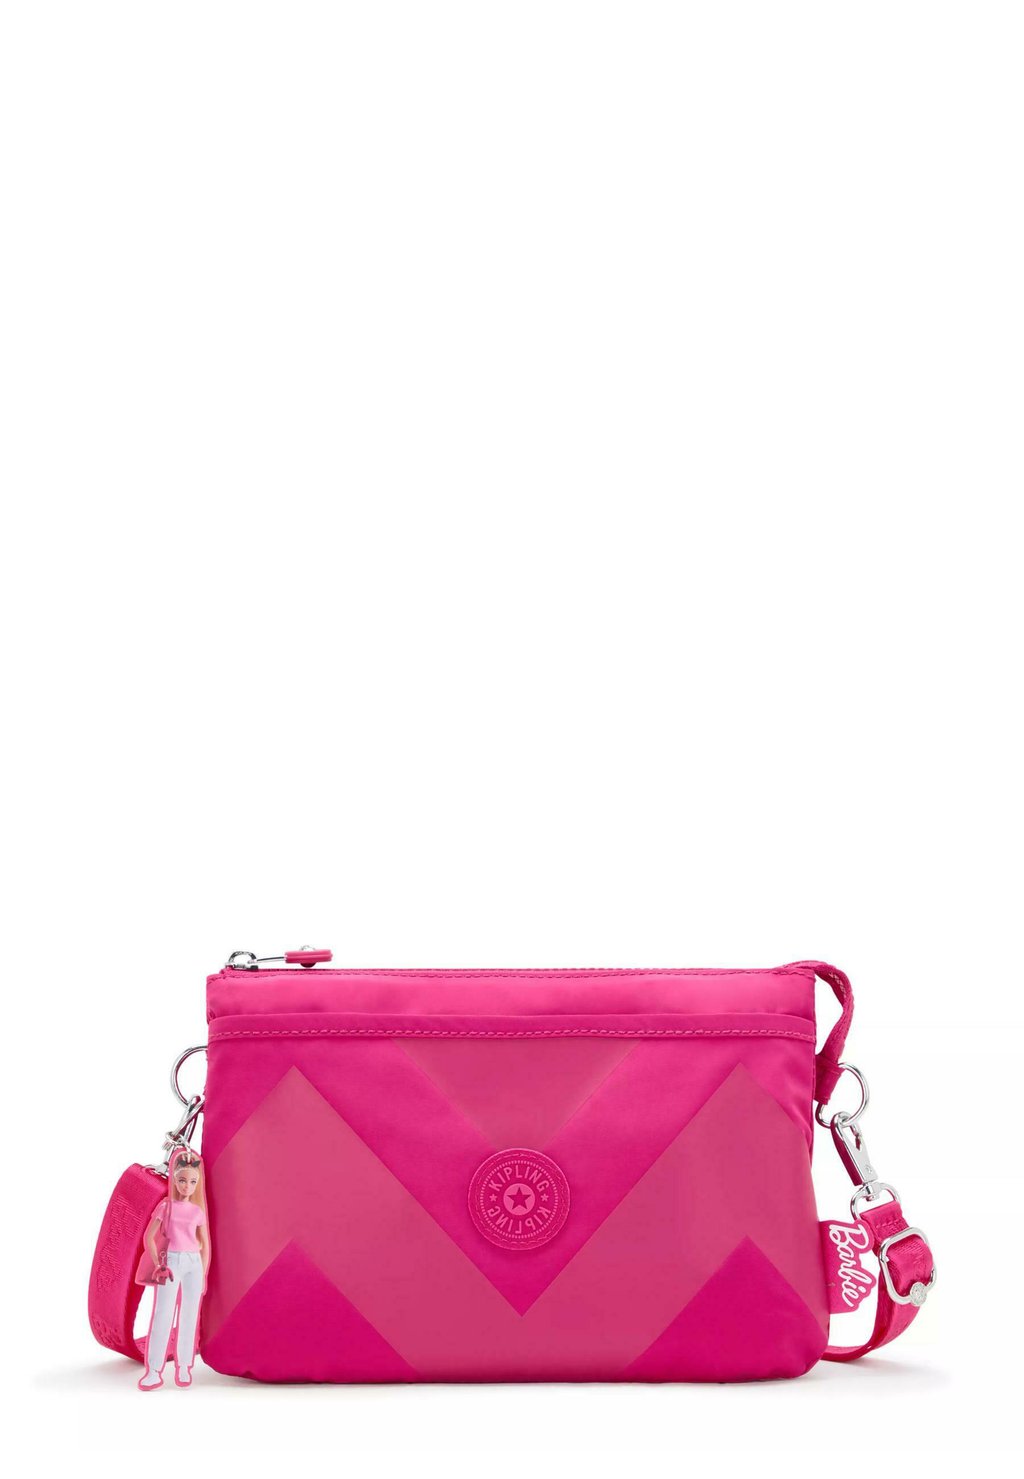 Сумка через плечо RIRI X BARBIE Kipling, цвет power pink сумка через плечо afia x barbie kipling неон фуксия